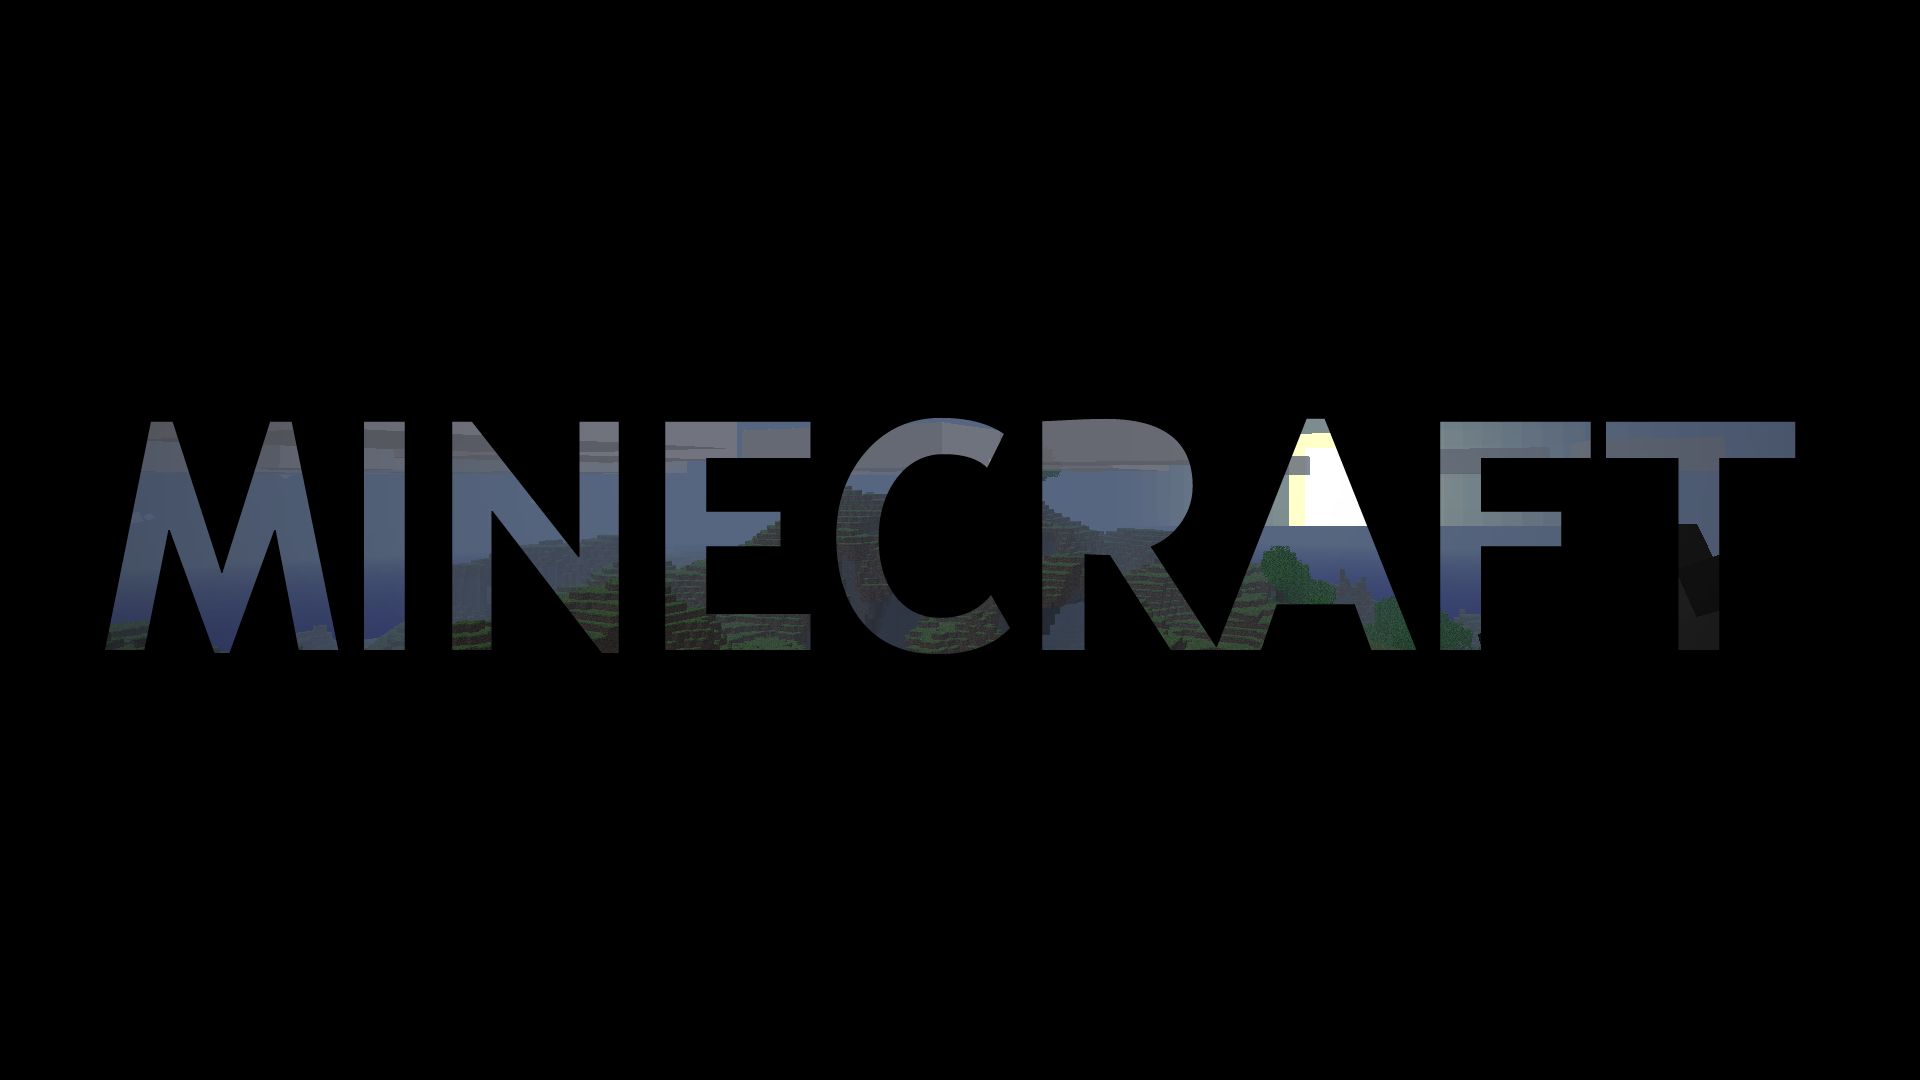 Desktop Minecraft Logo Icon Wallpaper Minecraft Logo  Minecraft Creeper   400x400 PNG Download  PNGkit